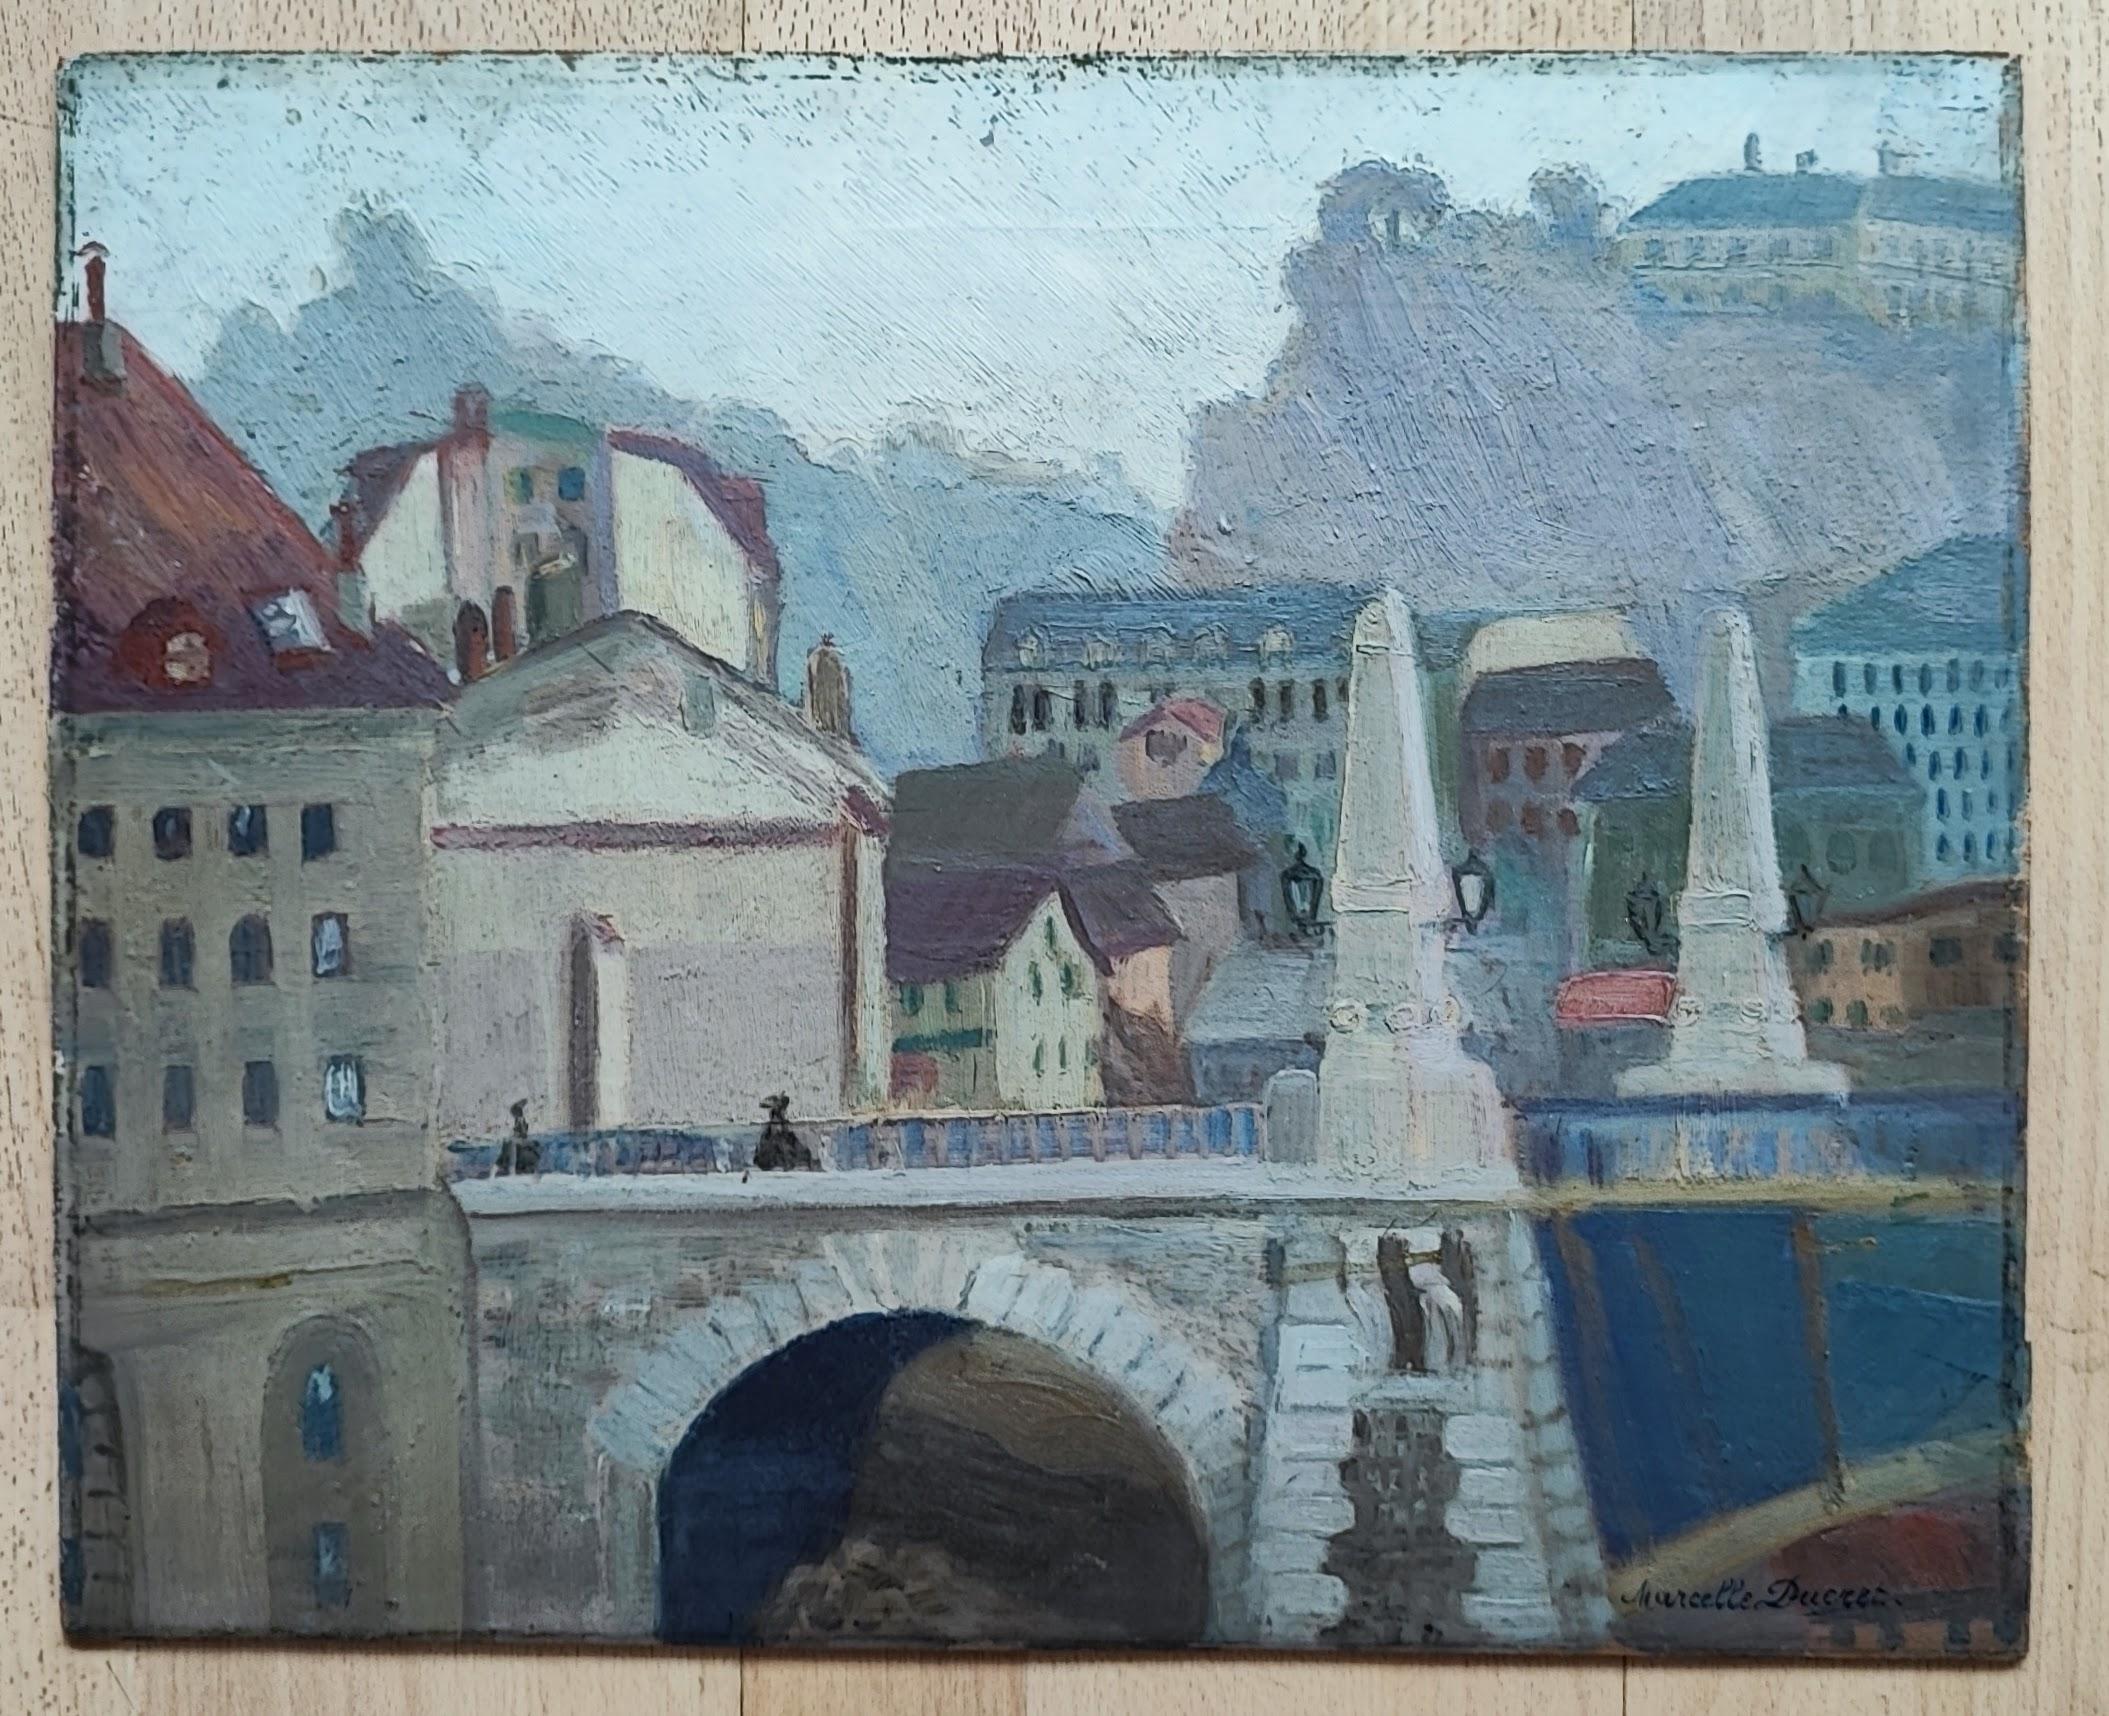 Landscape at the old bridge - Painting by Marcel Ducret